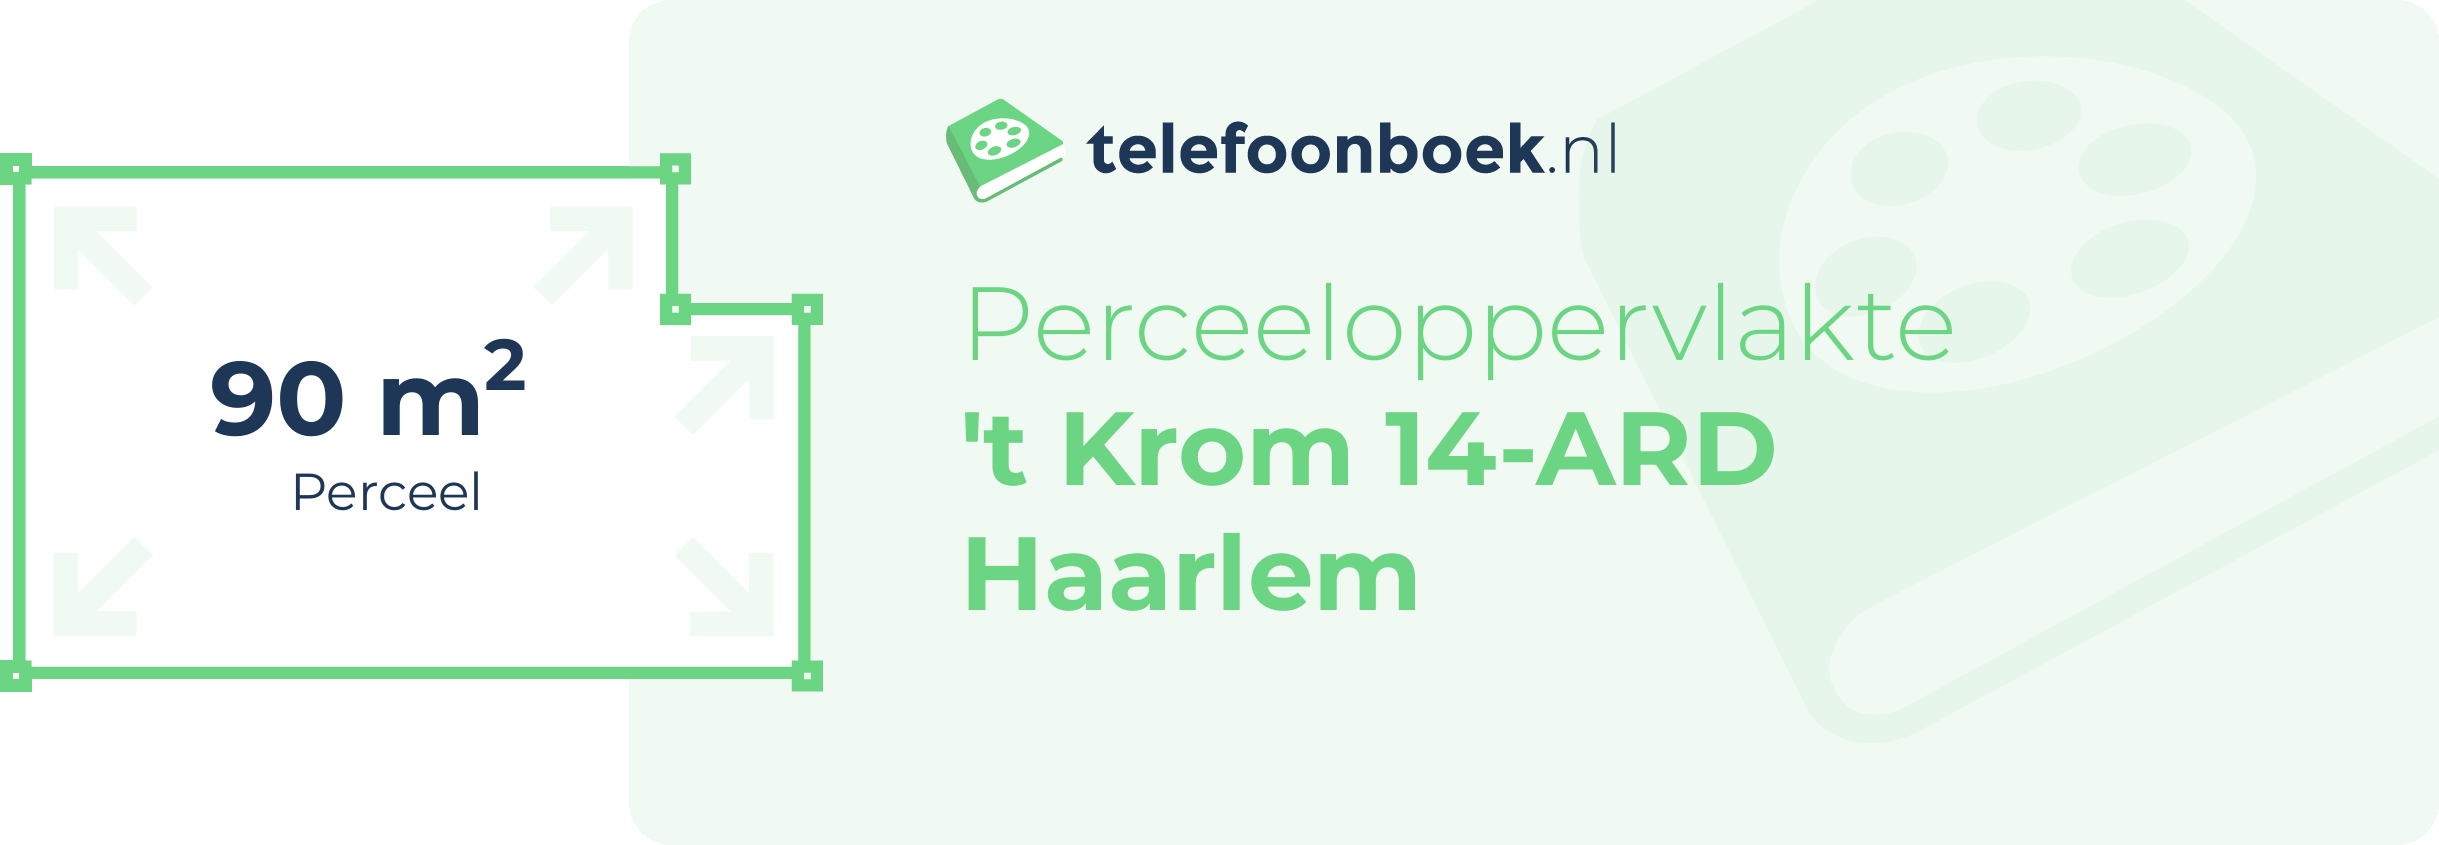 Perceeloppervlakte 't Krom 14-ARD Haarlem